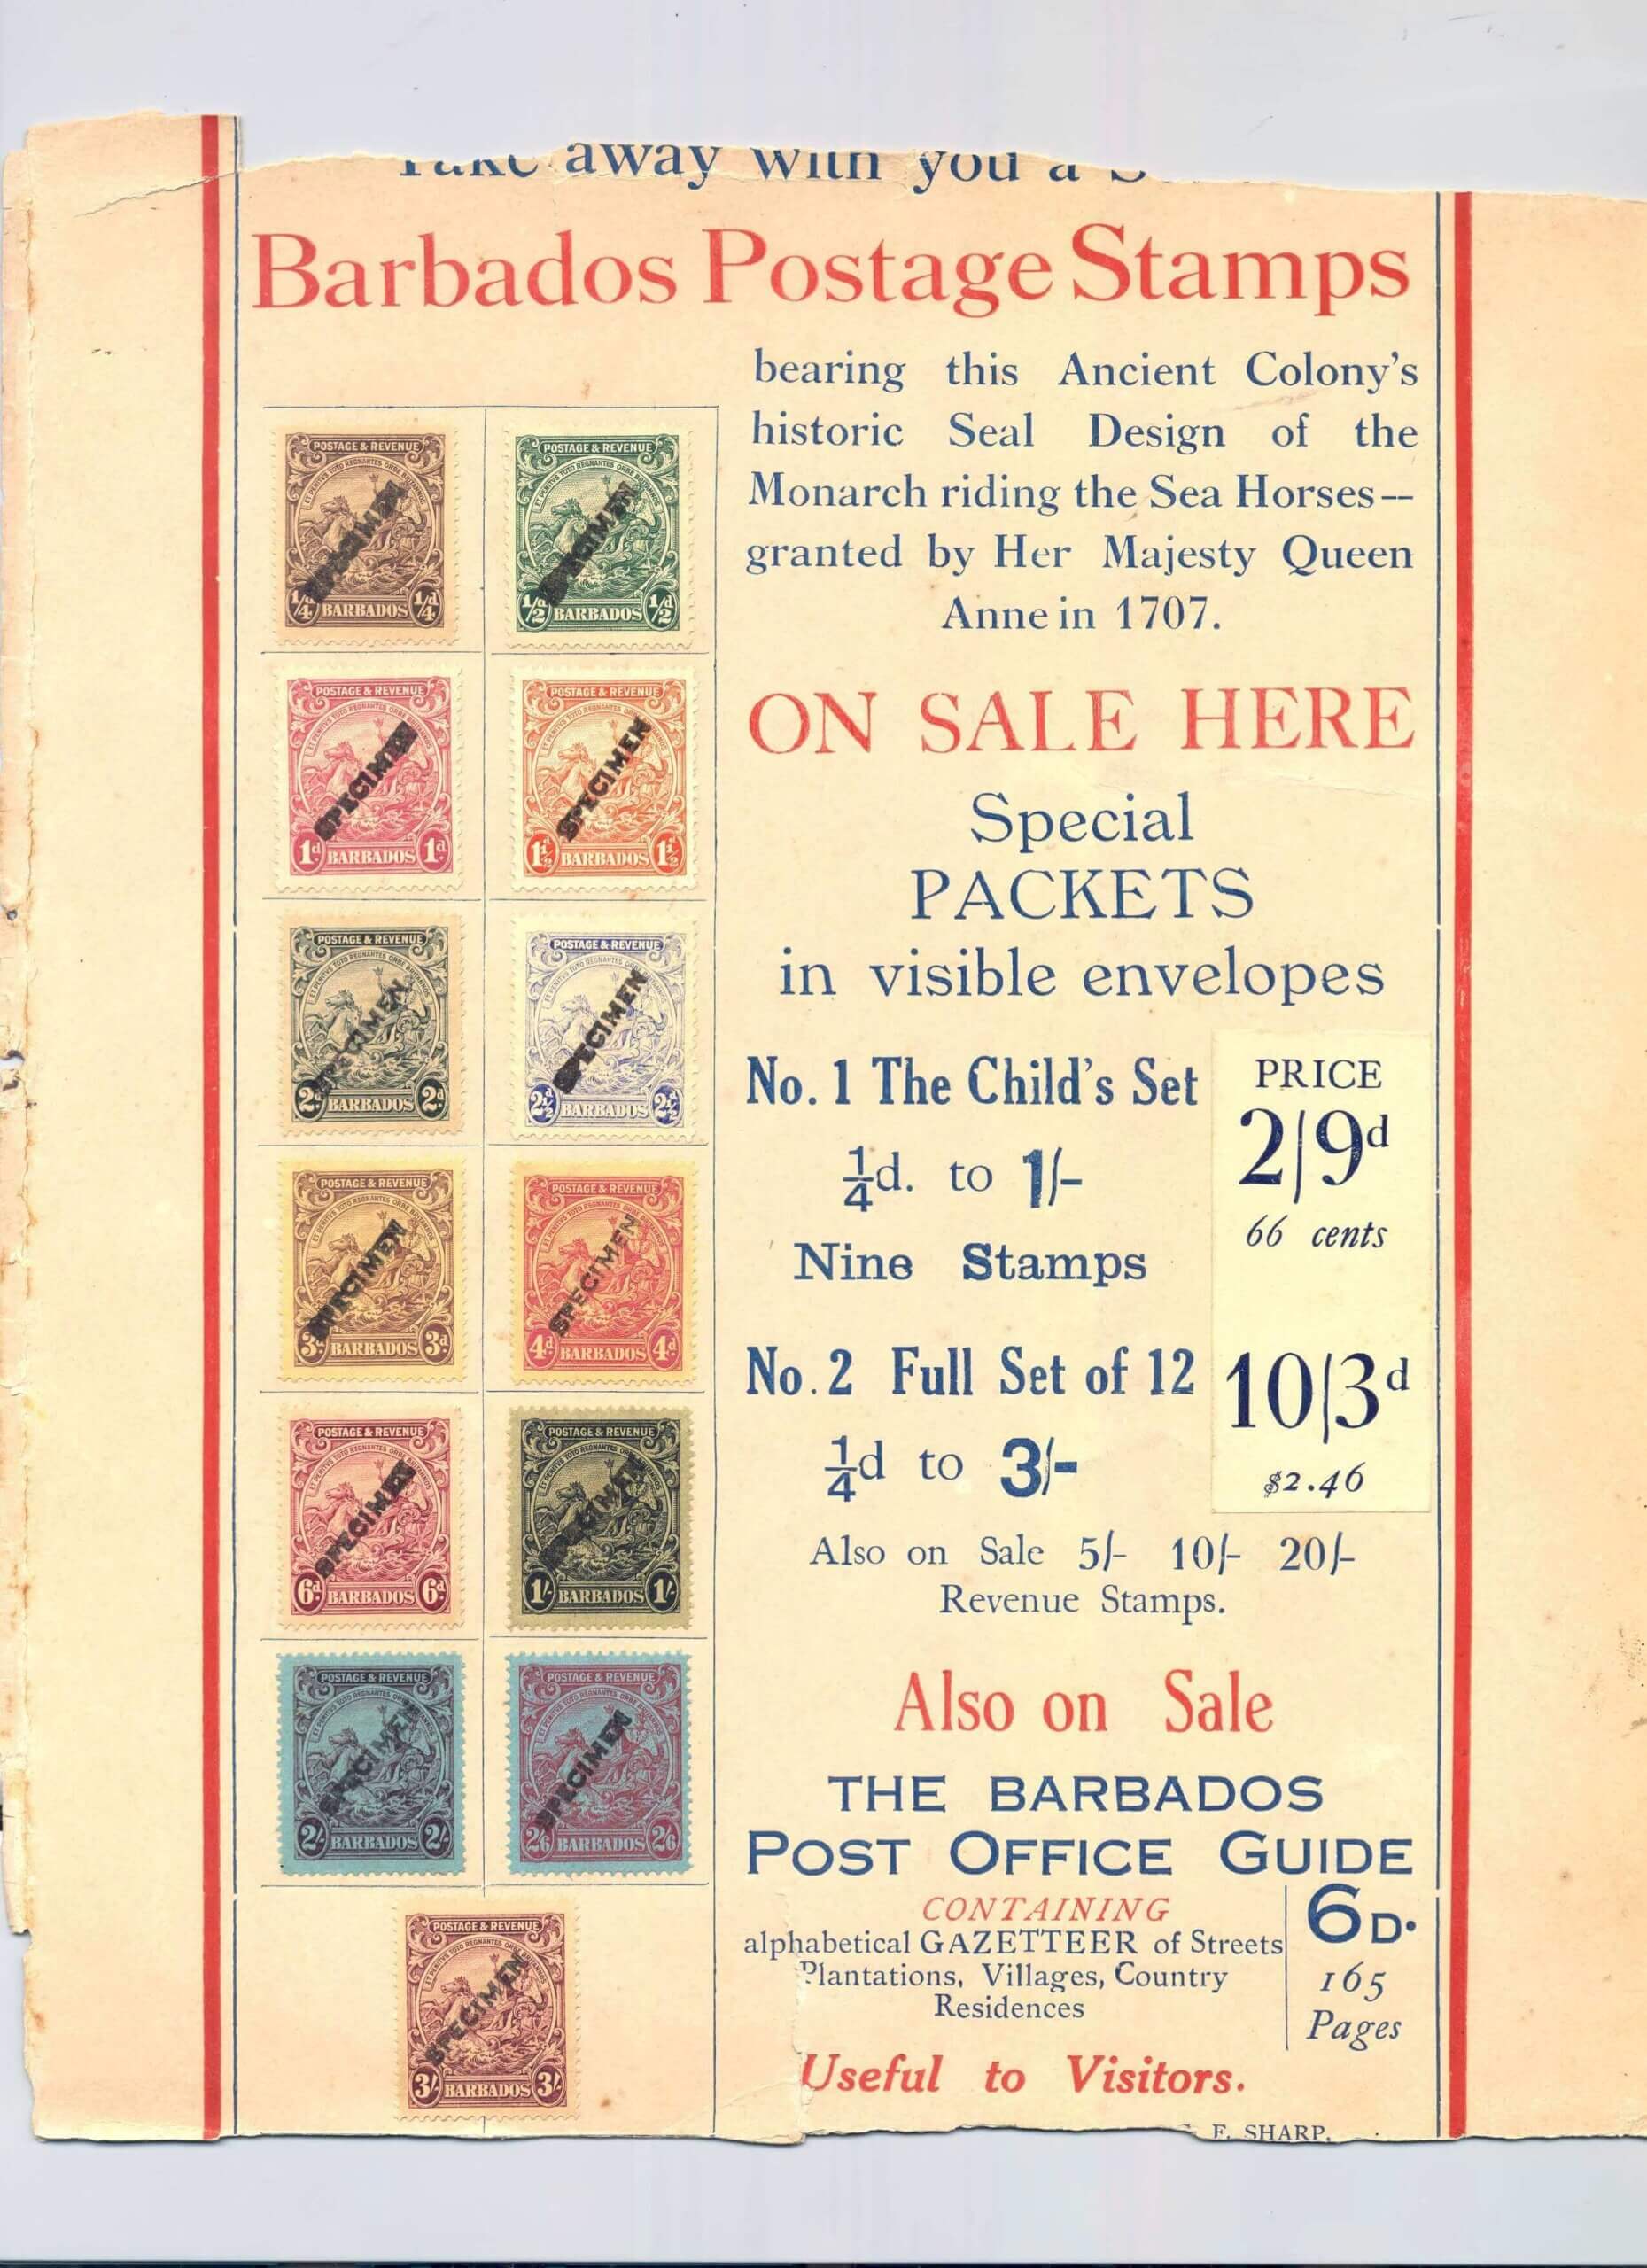 Barbados Stamps specimen stamps advertisement